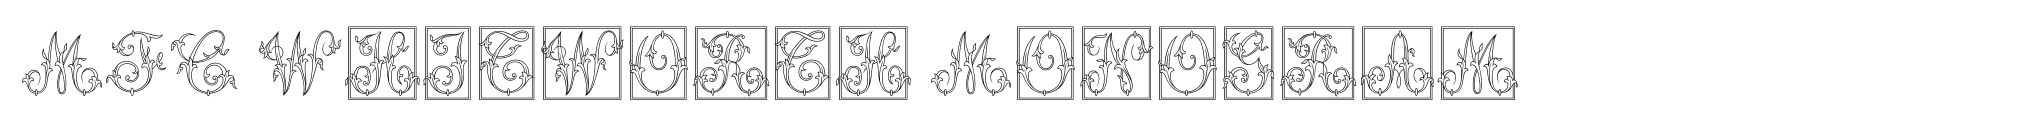 MFC Whitworth Monogram image